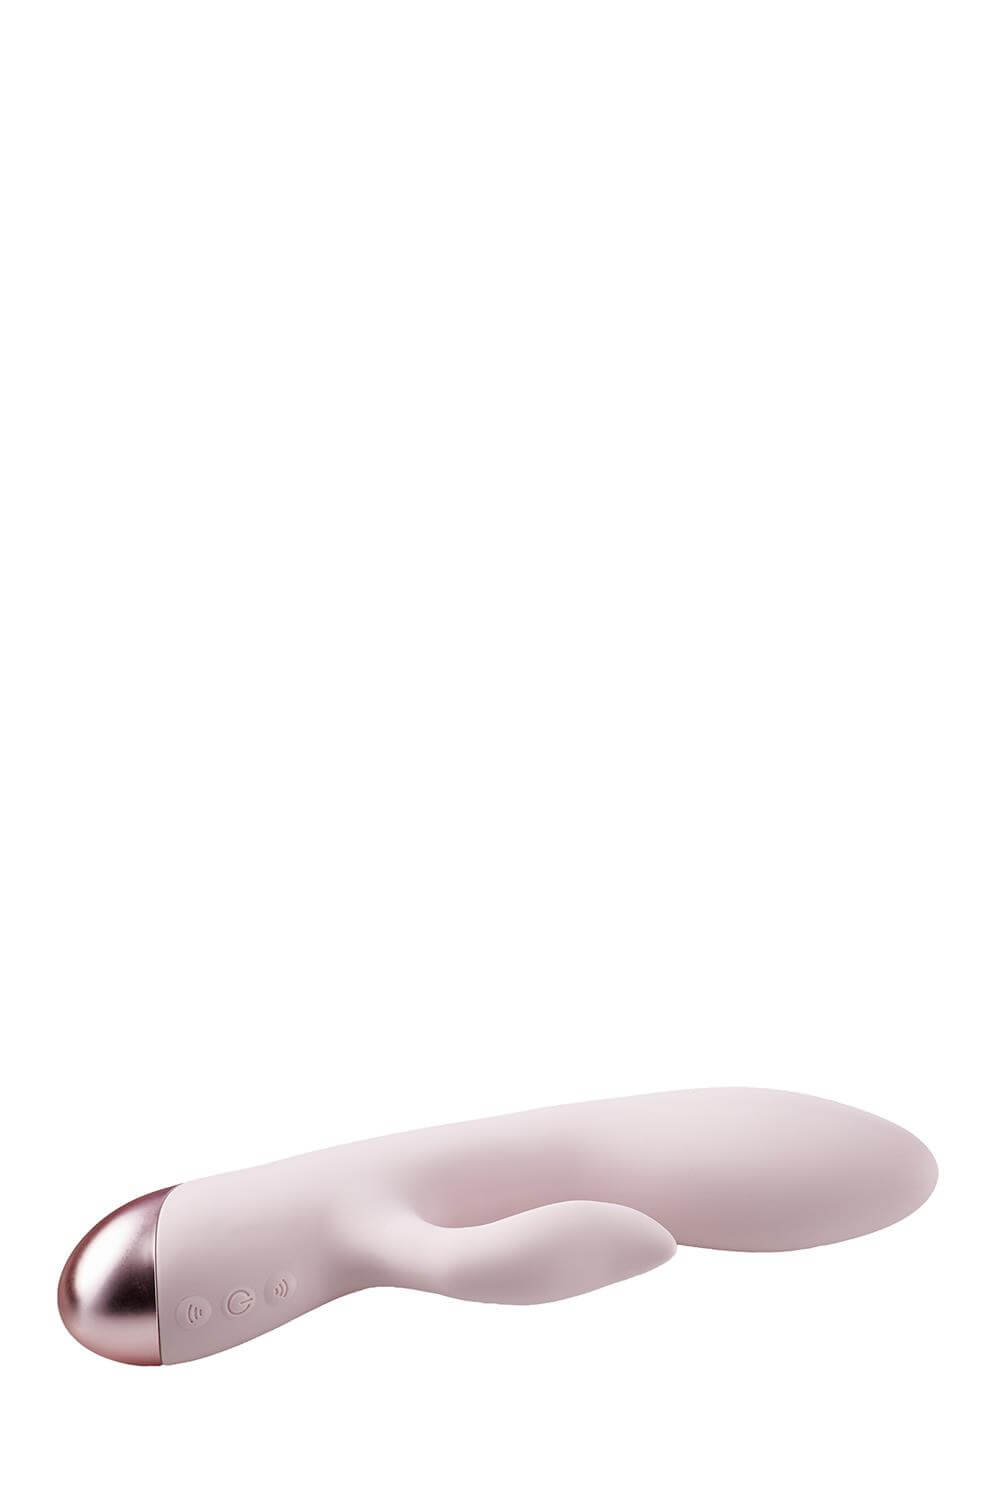 Vivre Coco - akkus, csiklókaros vibrátor (pink) kép